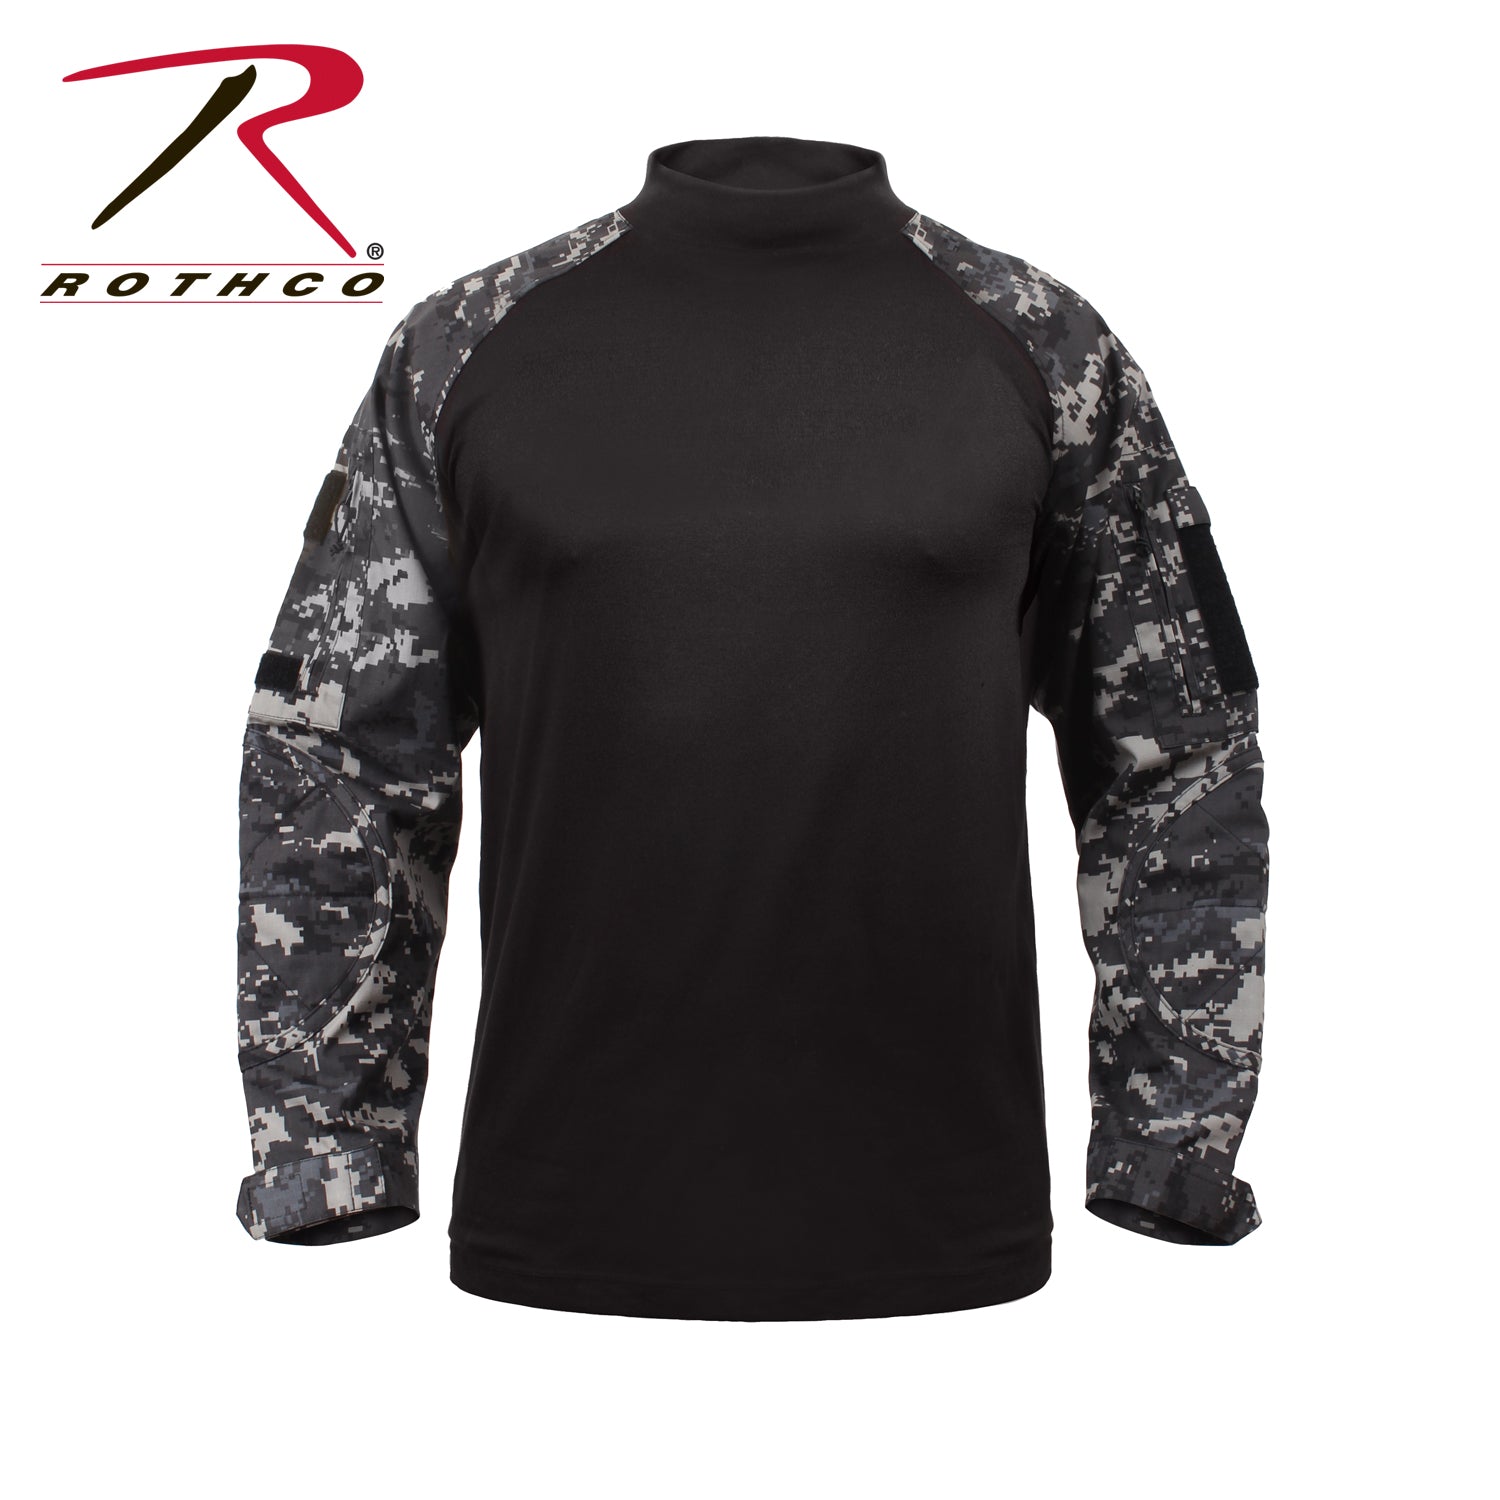 Milspec Military NYCO FR Fire Retardant Combat Shirt Big & Tall Shirts MilTac Tactical Military Outdoor Gear Australia